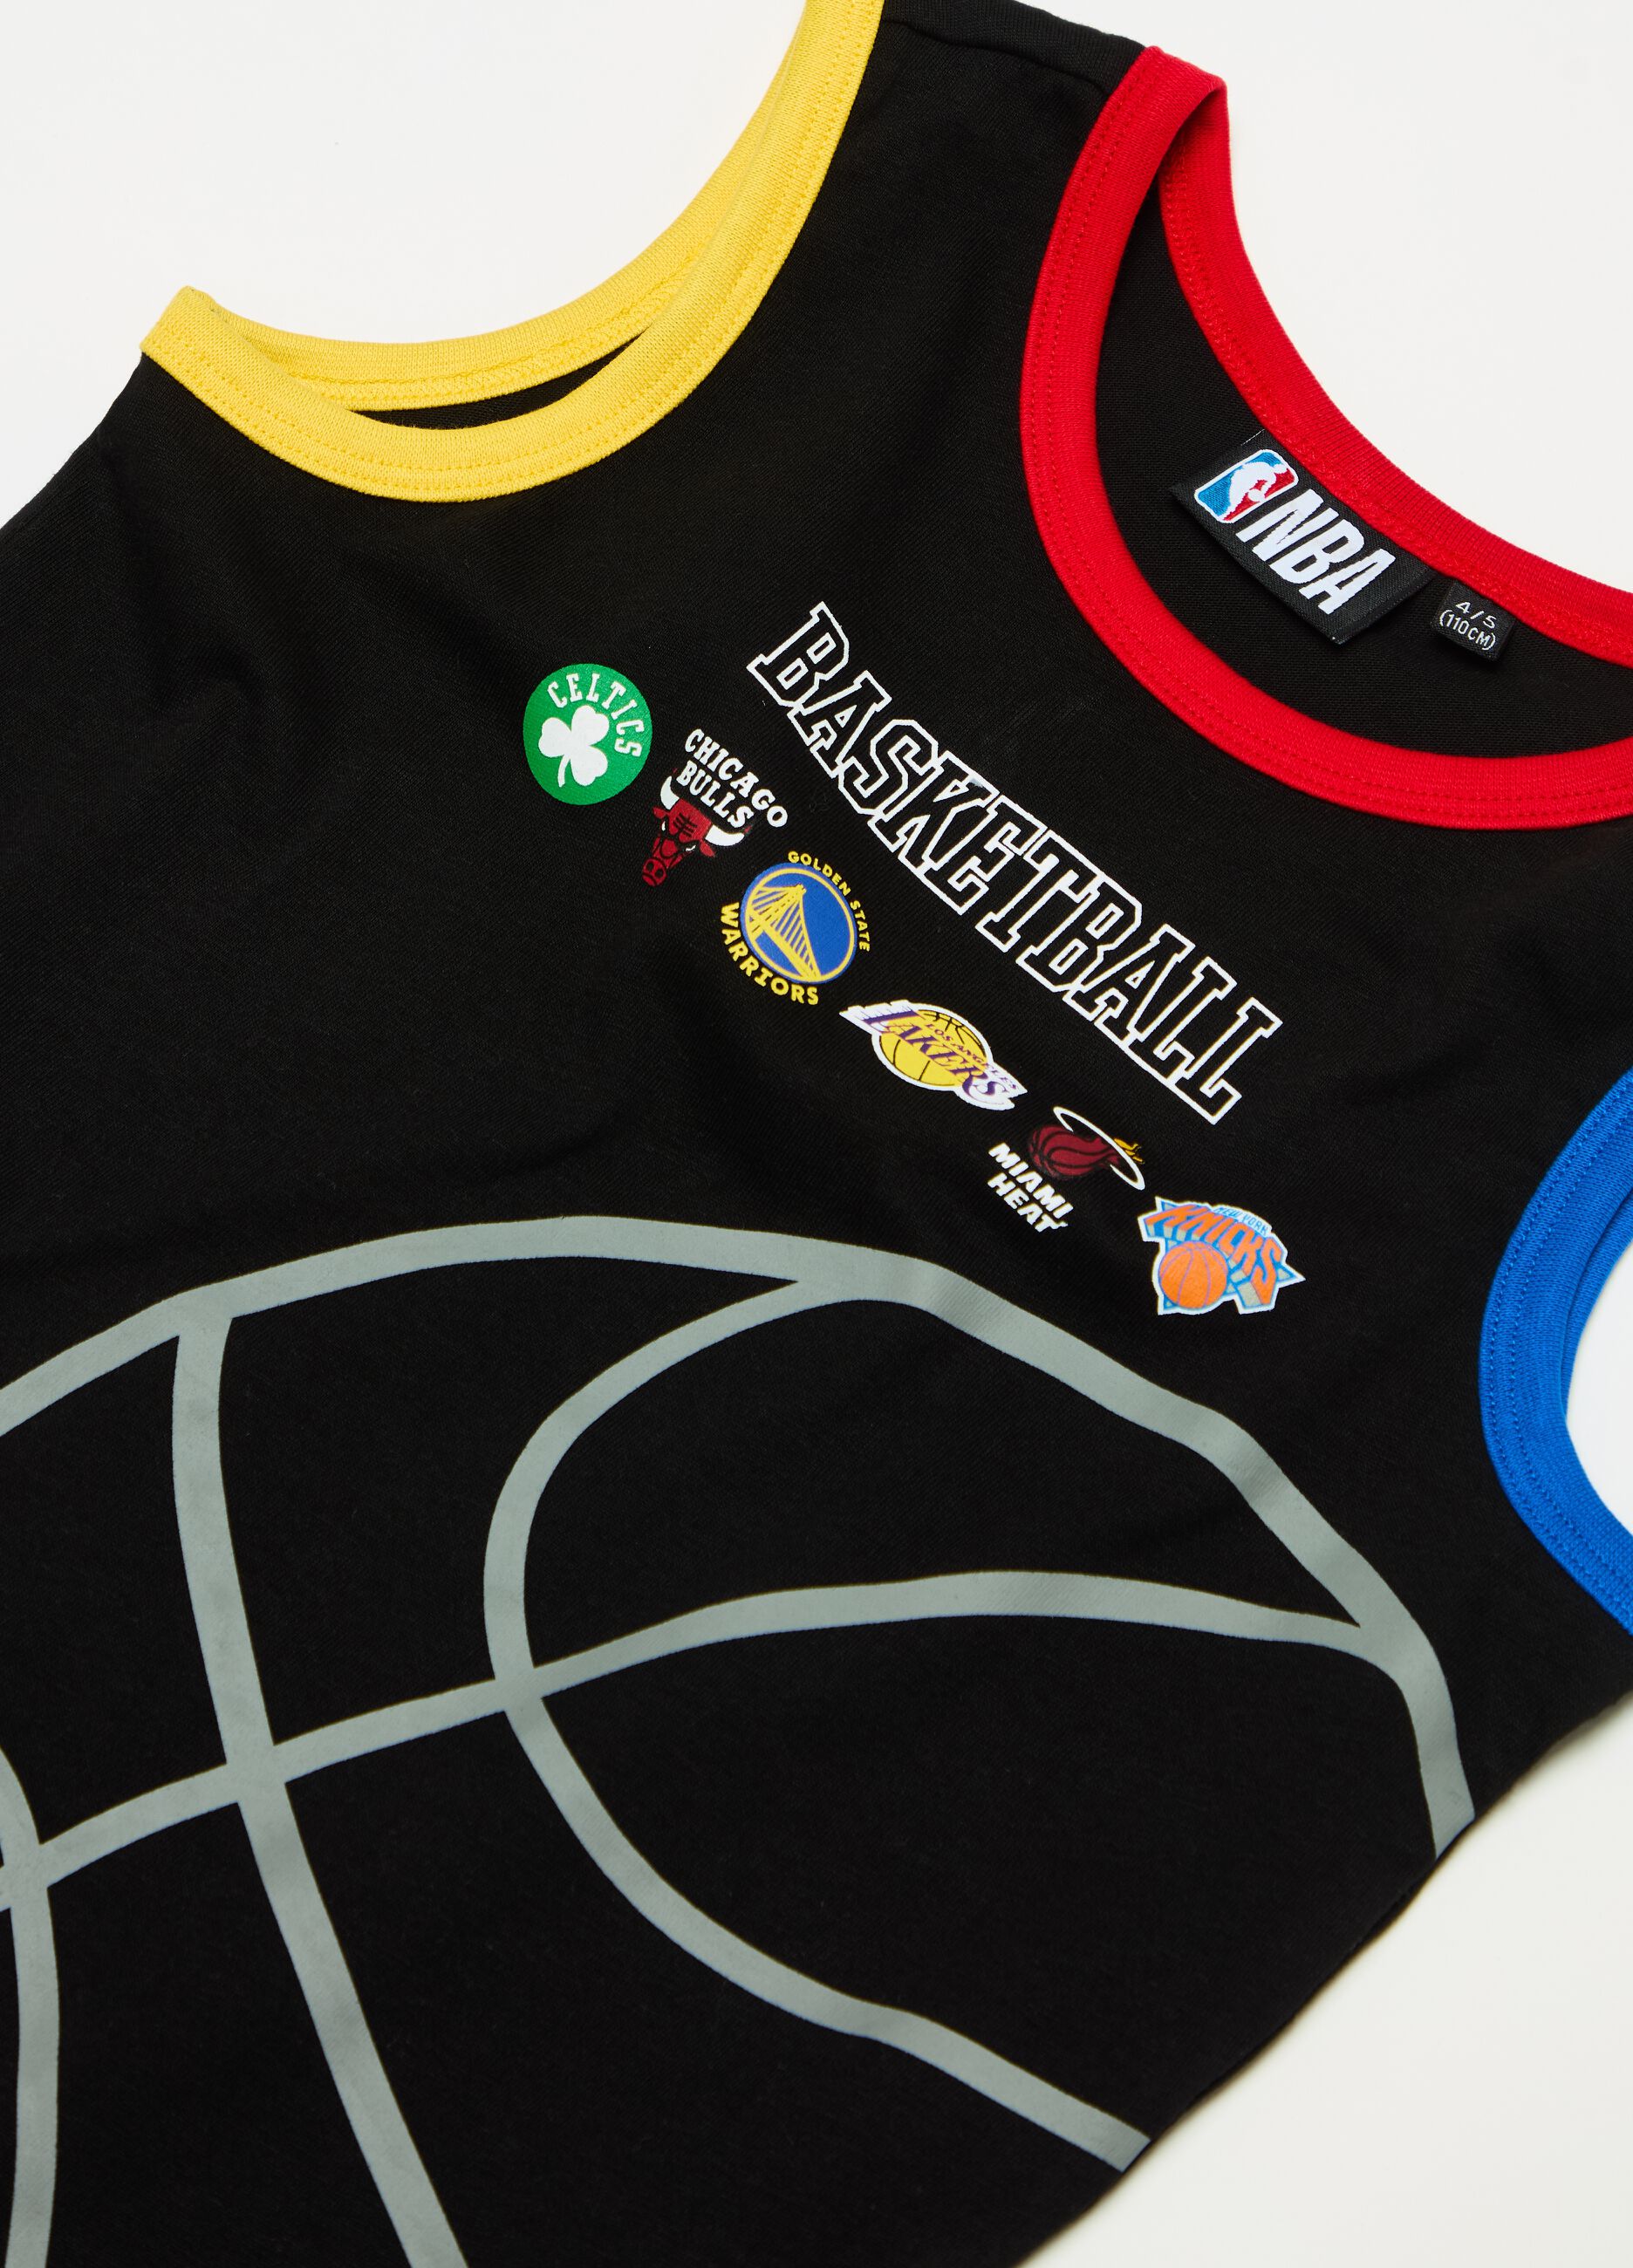 Racerback vest with NBA teams’ logos print